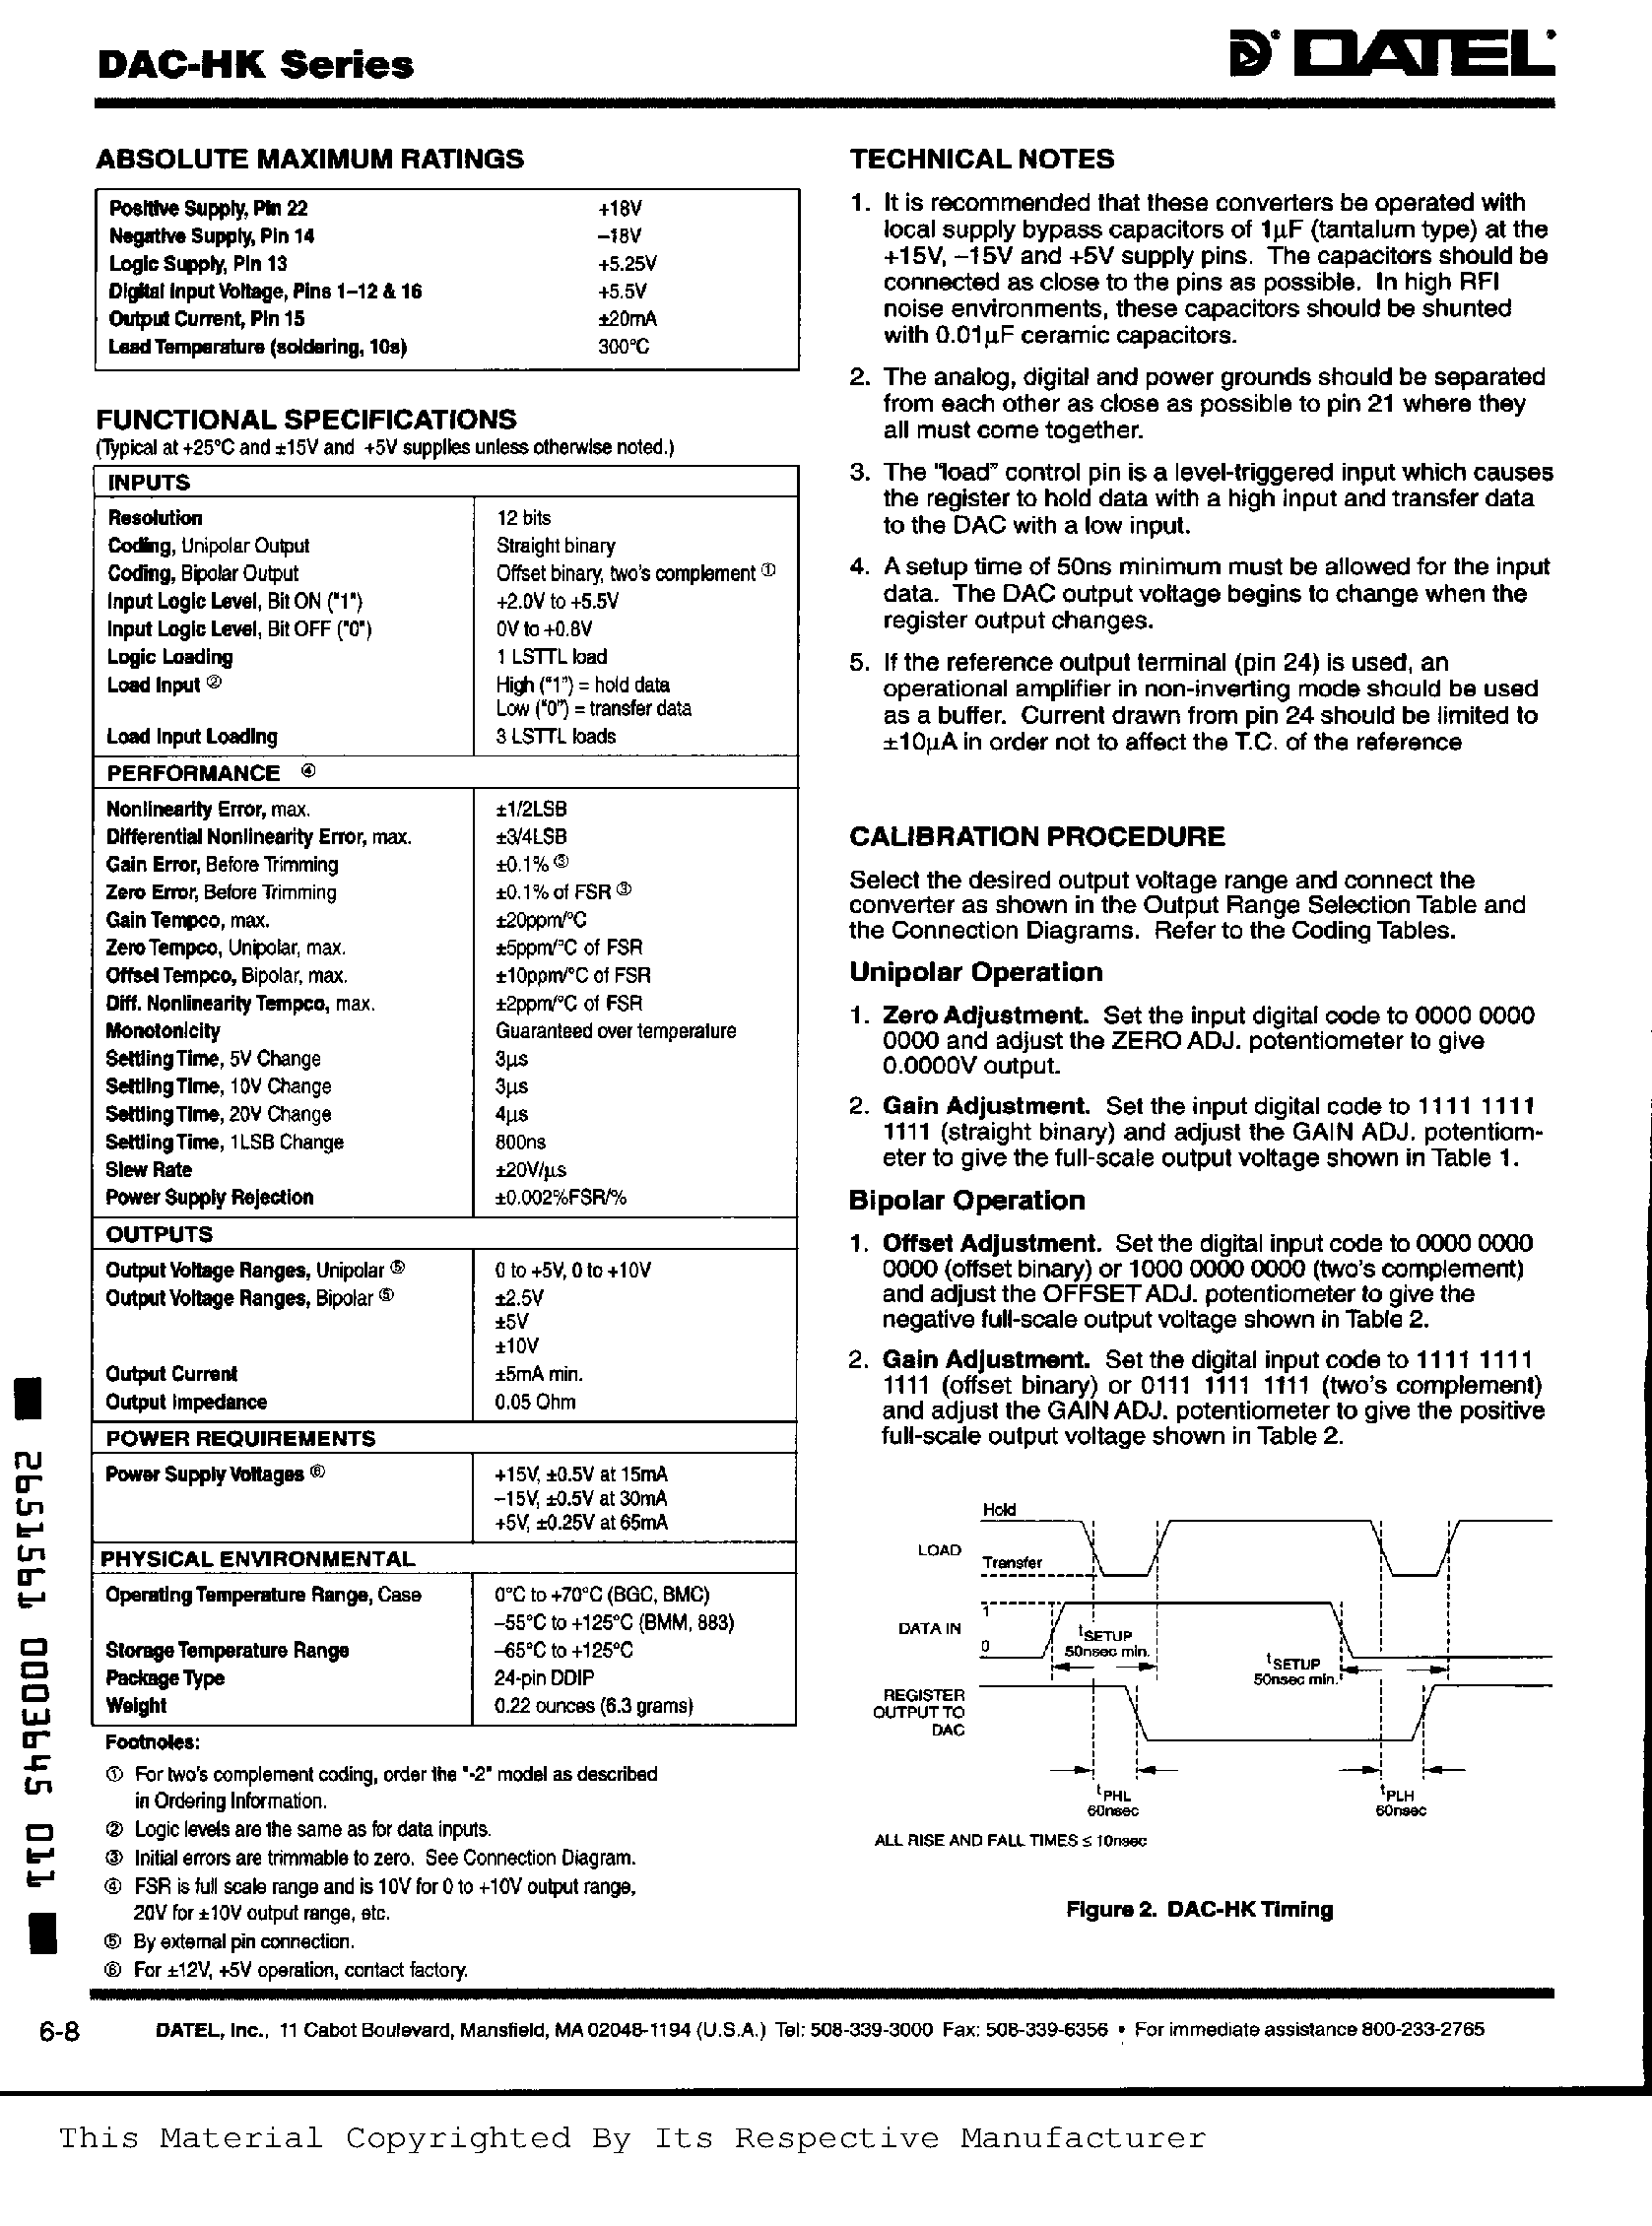 Datasheet DAC-HK12BMC - HIGH PERFORMANCE 12 BIT DAC WITH INPUT REGISTERS page 2